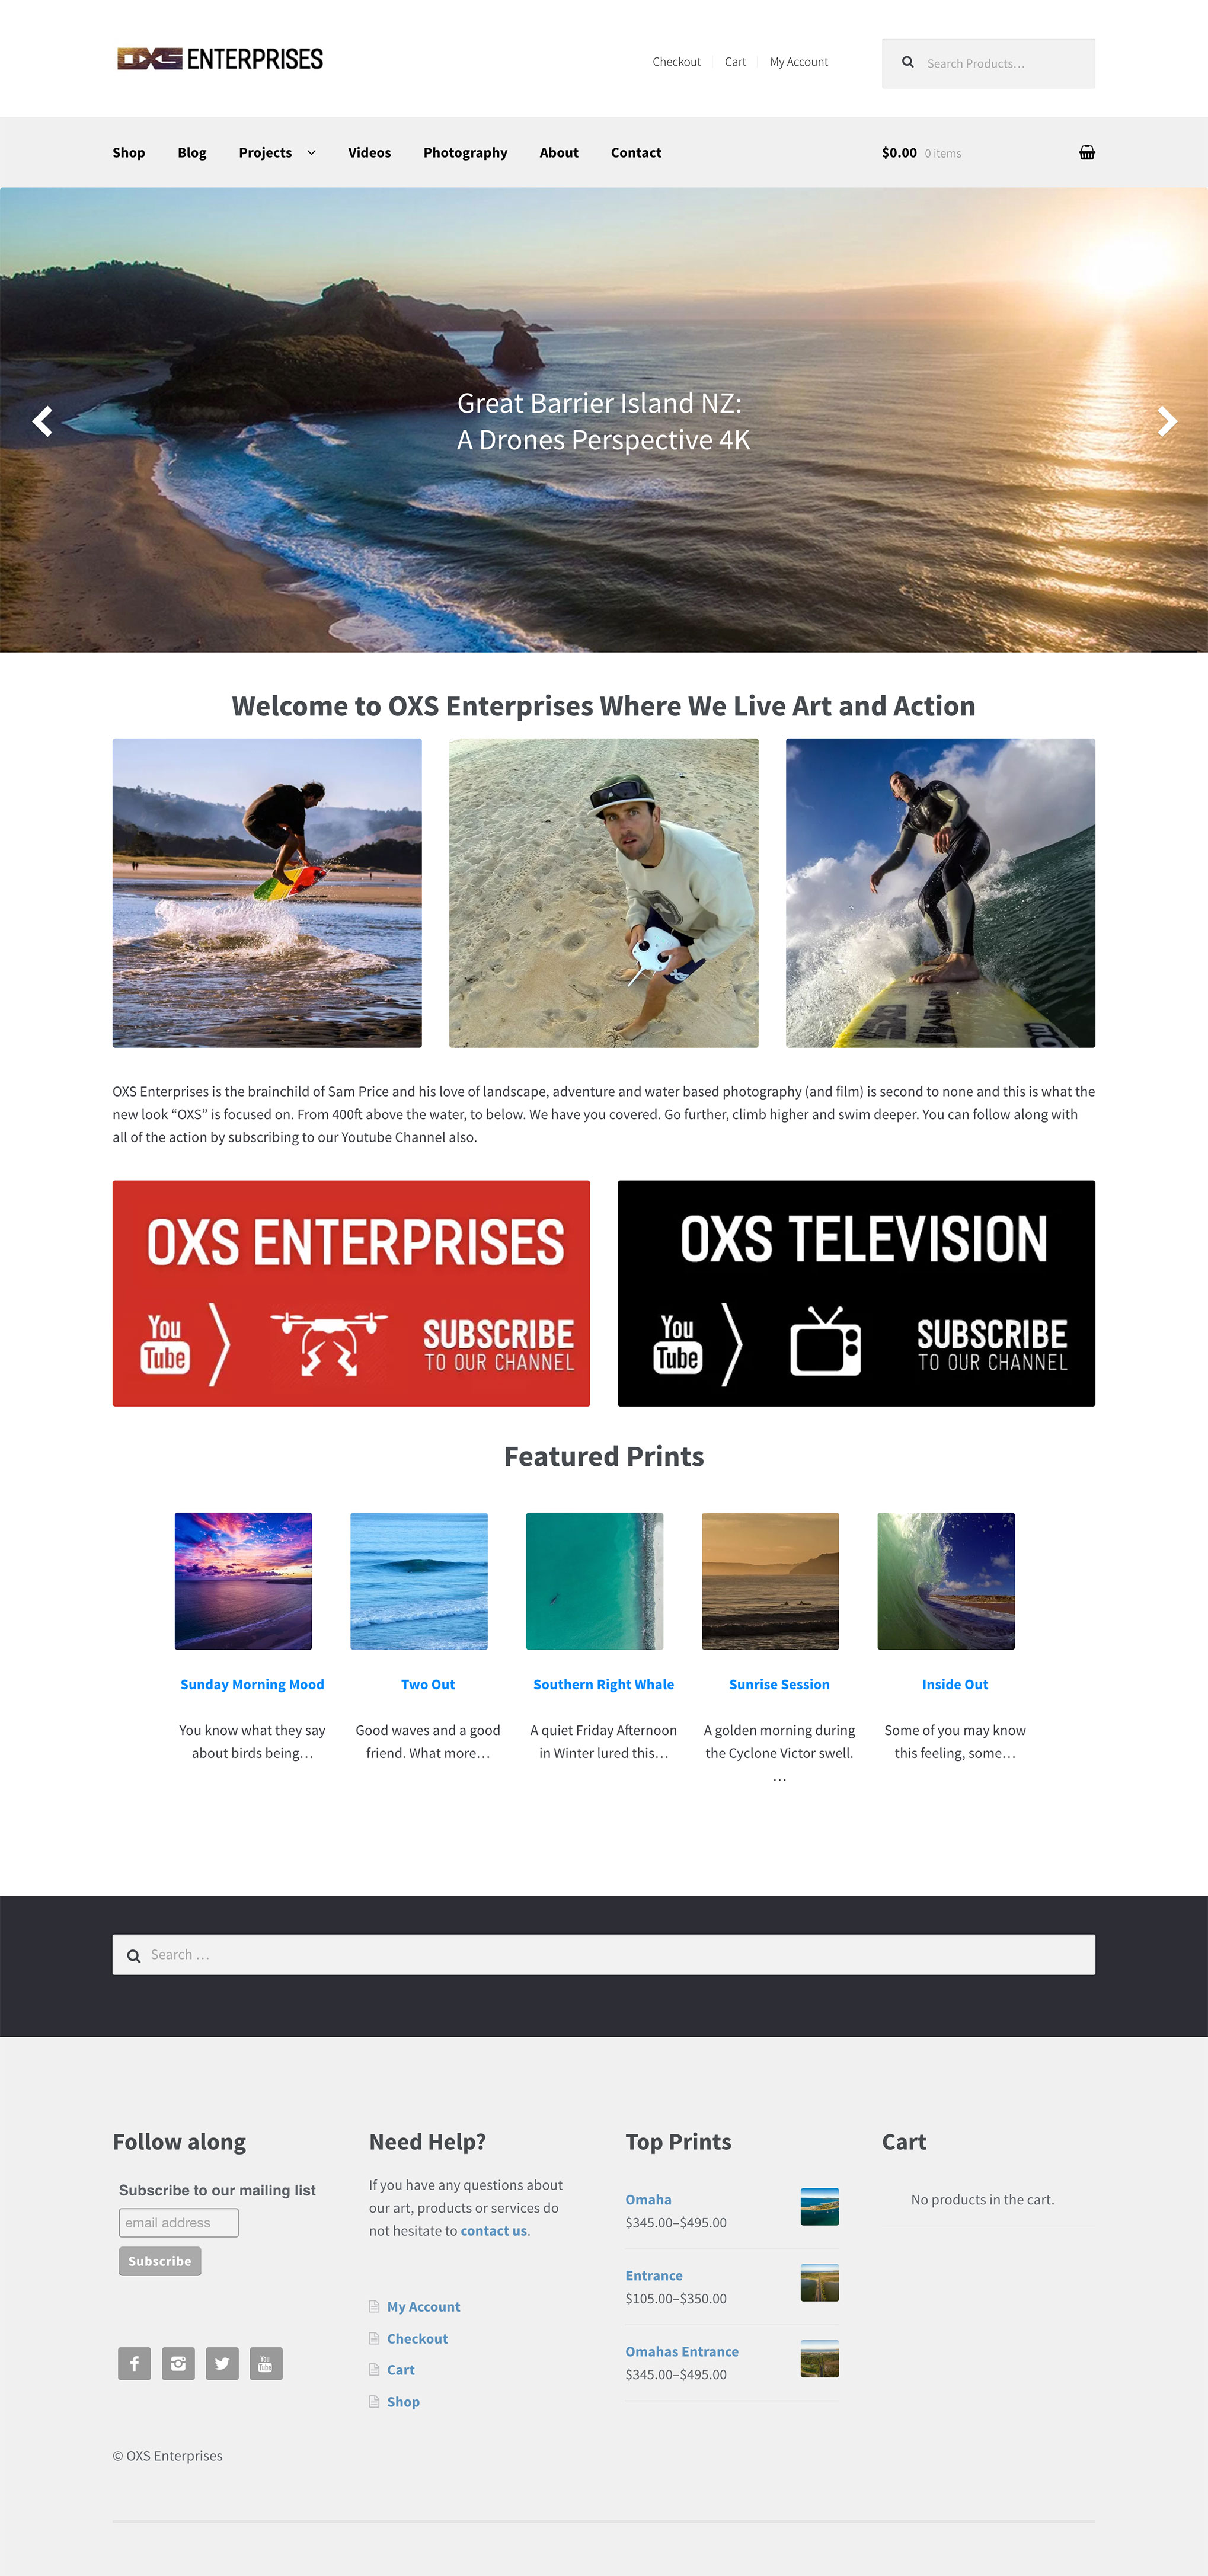 oxs-enterprises-home-page